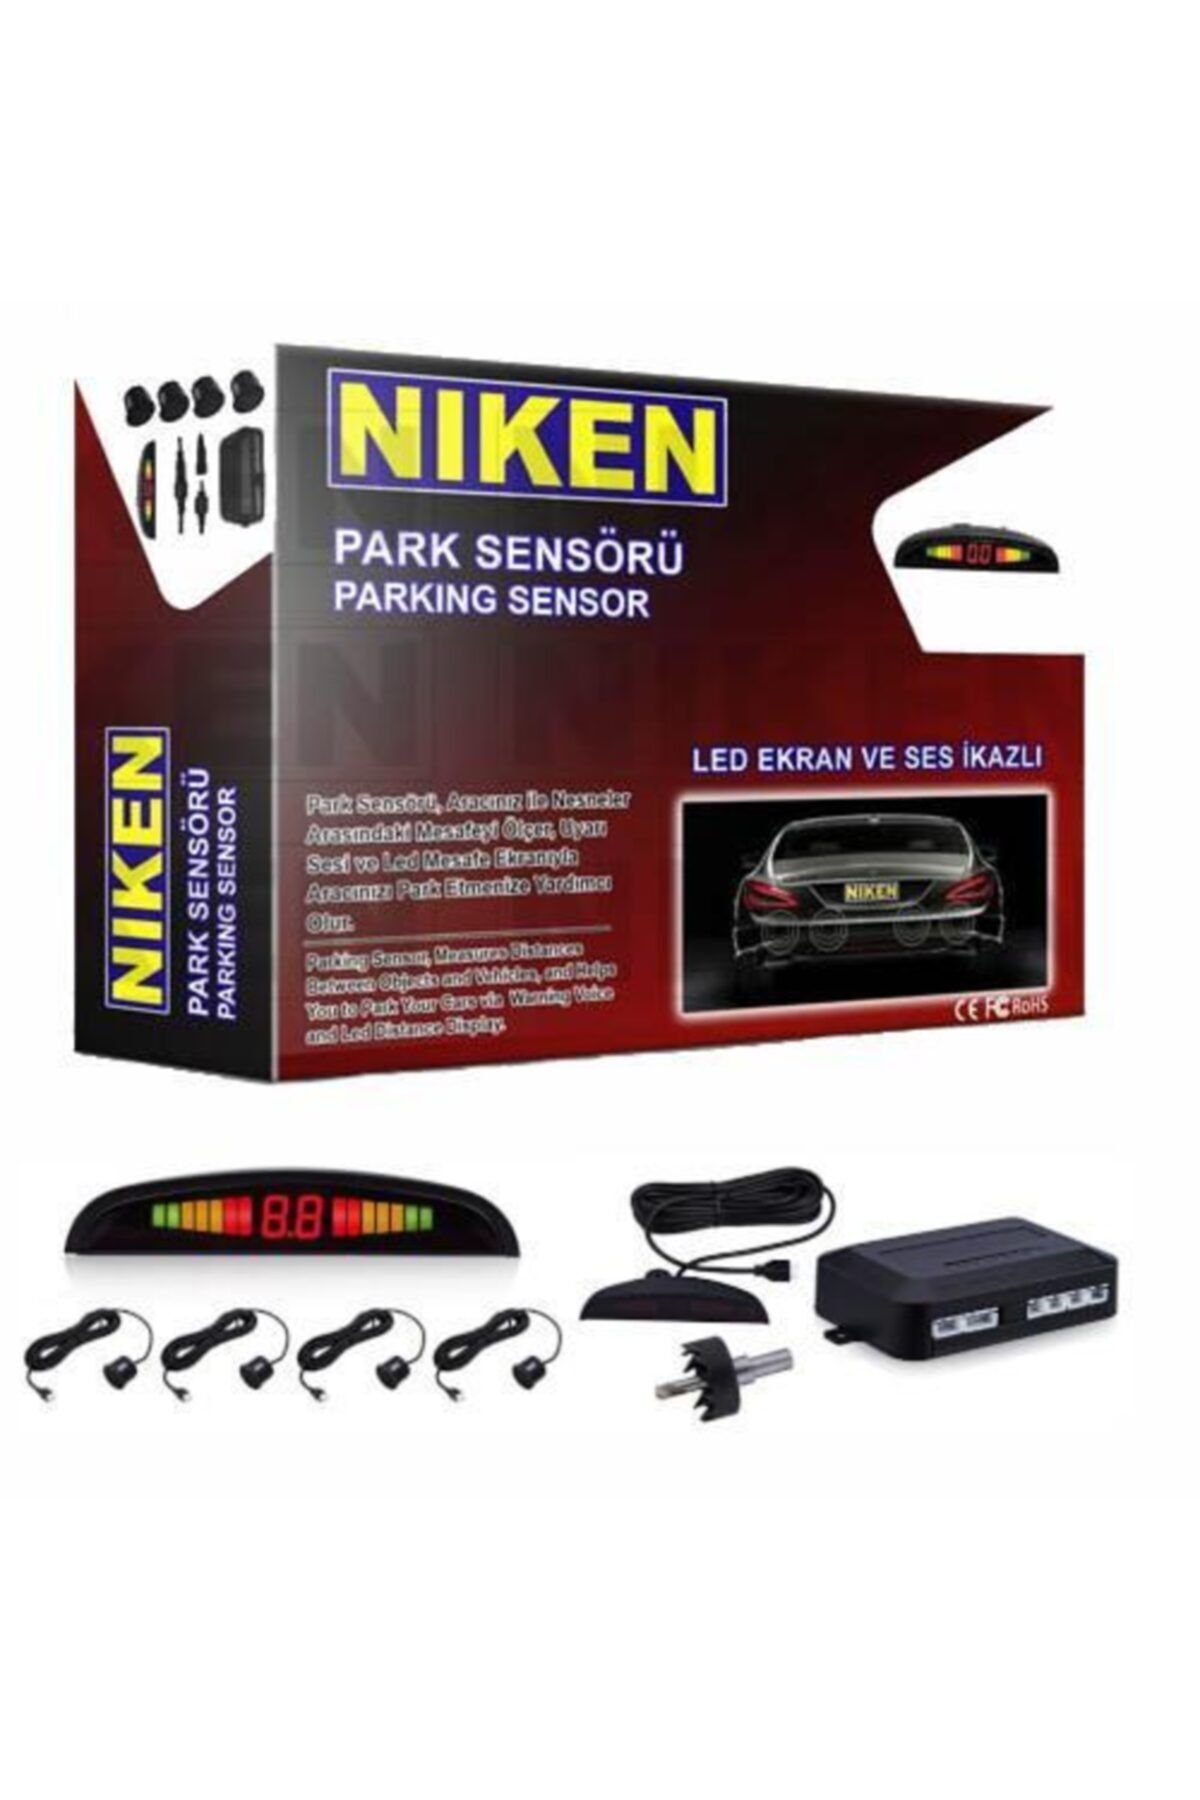 Niken Park Sensörü Ekranlı Ve Ses Ikazlı Garantili Siyah